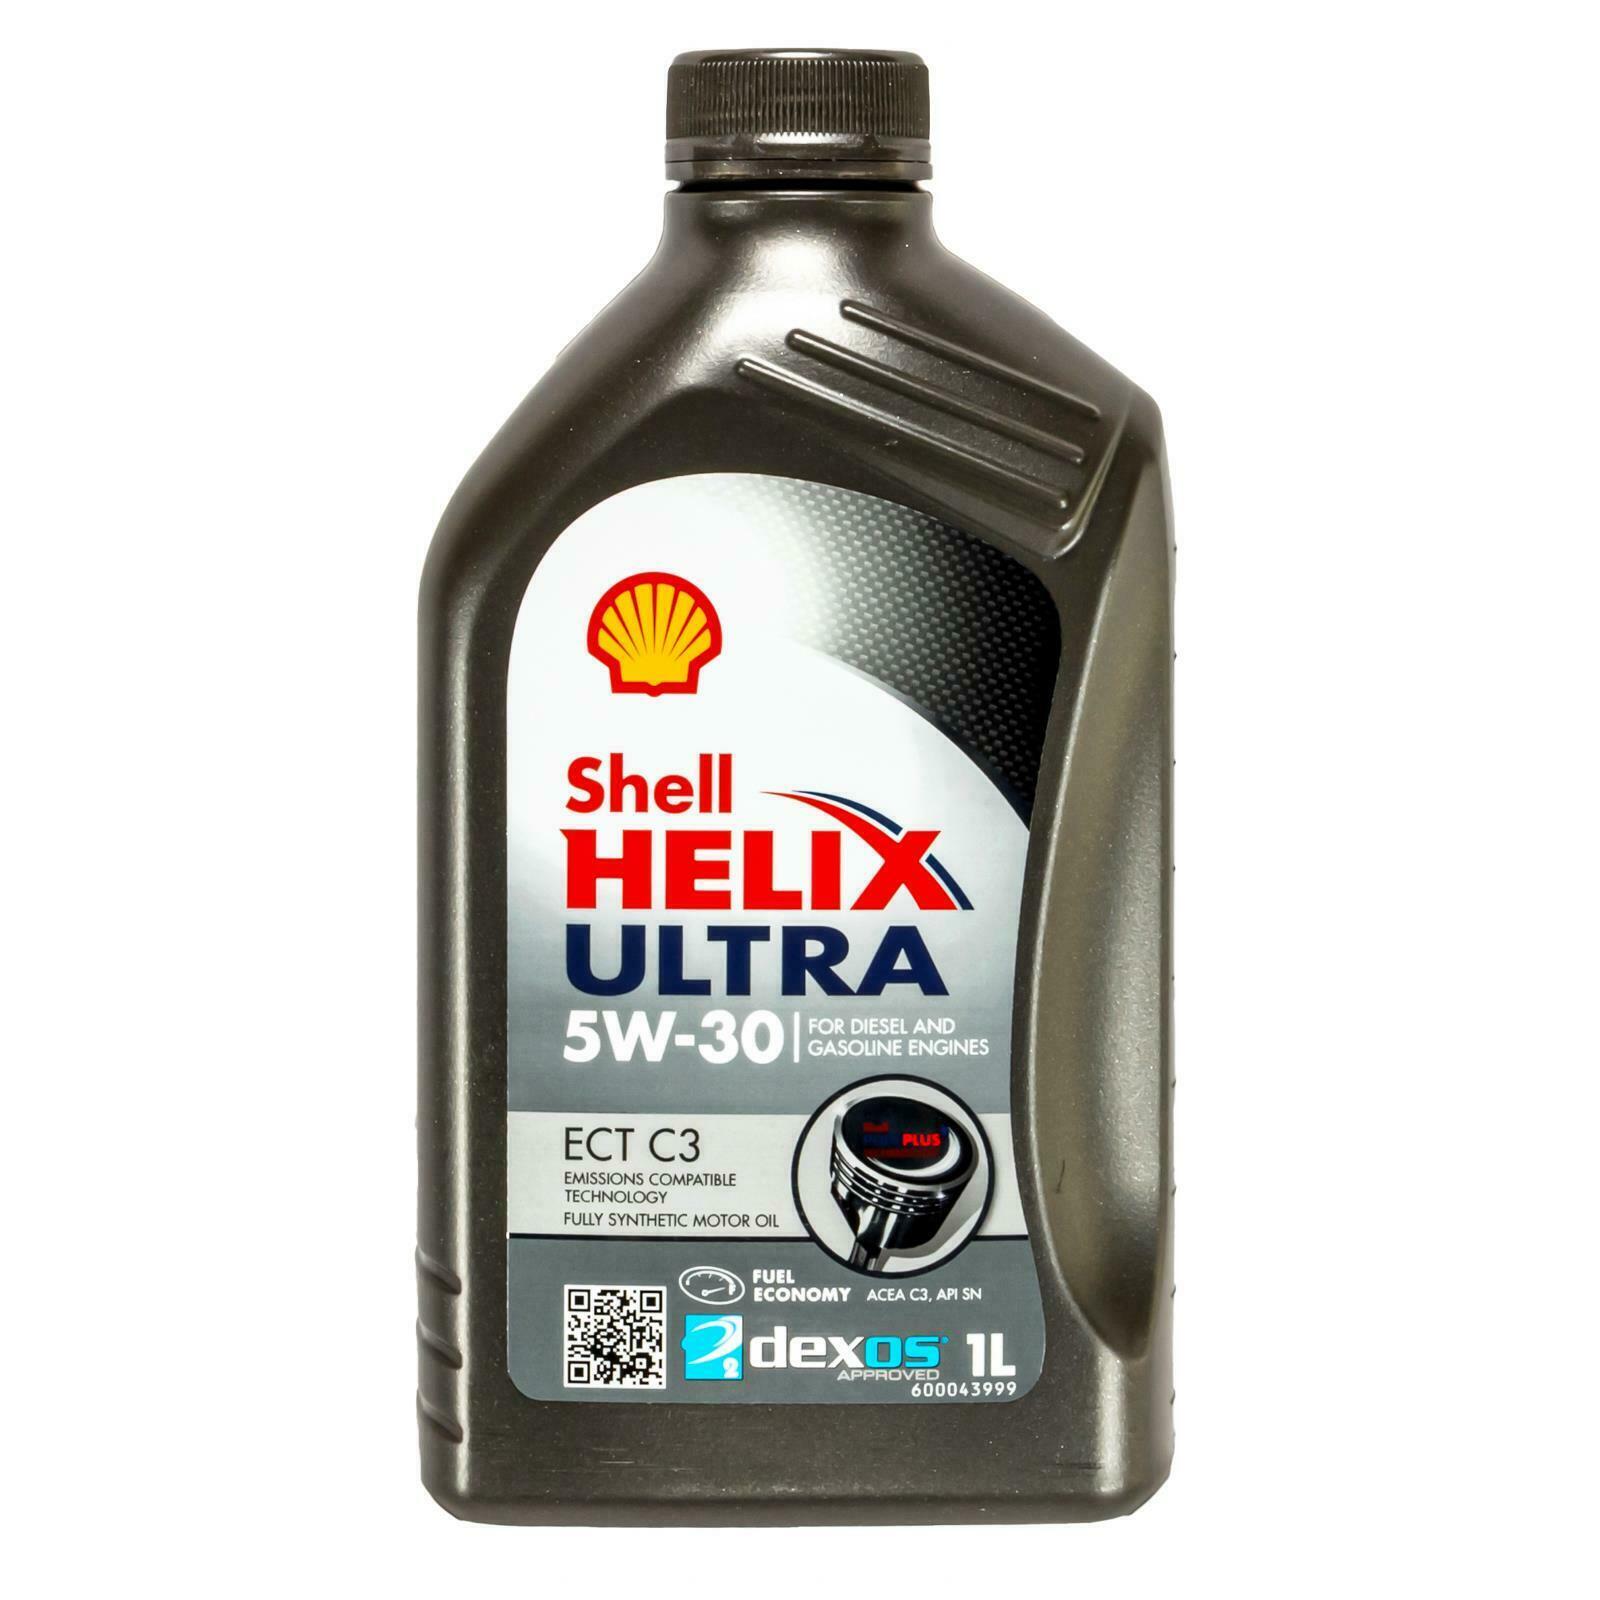 Shell Helix Ultra 5w30. Shell Helix Ultra ect c3. Shell 550042845. Shell Helix Ultra состояние двигателя. Масло shell ect 5w30